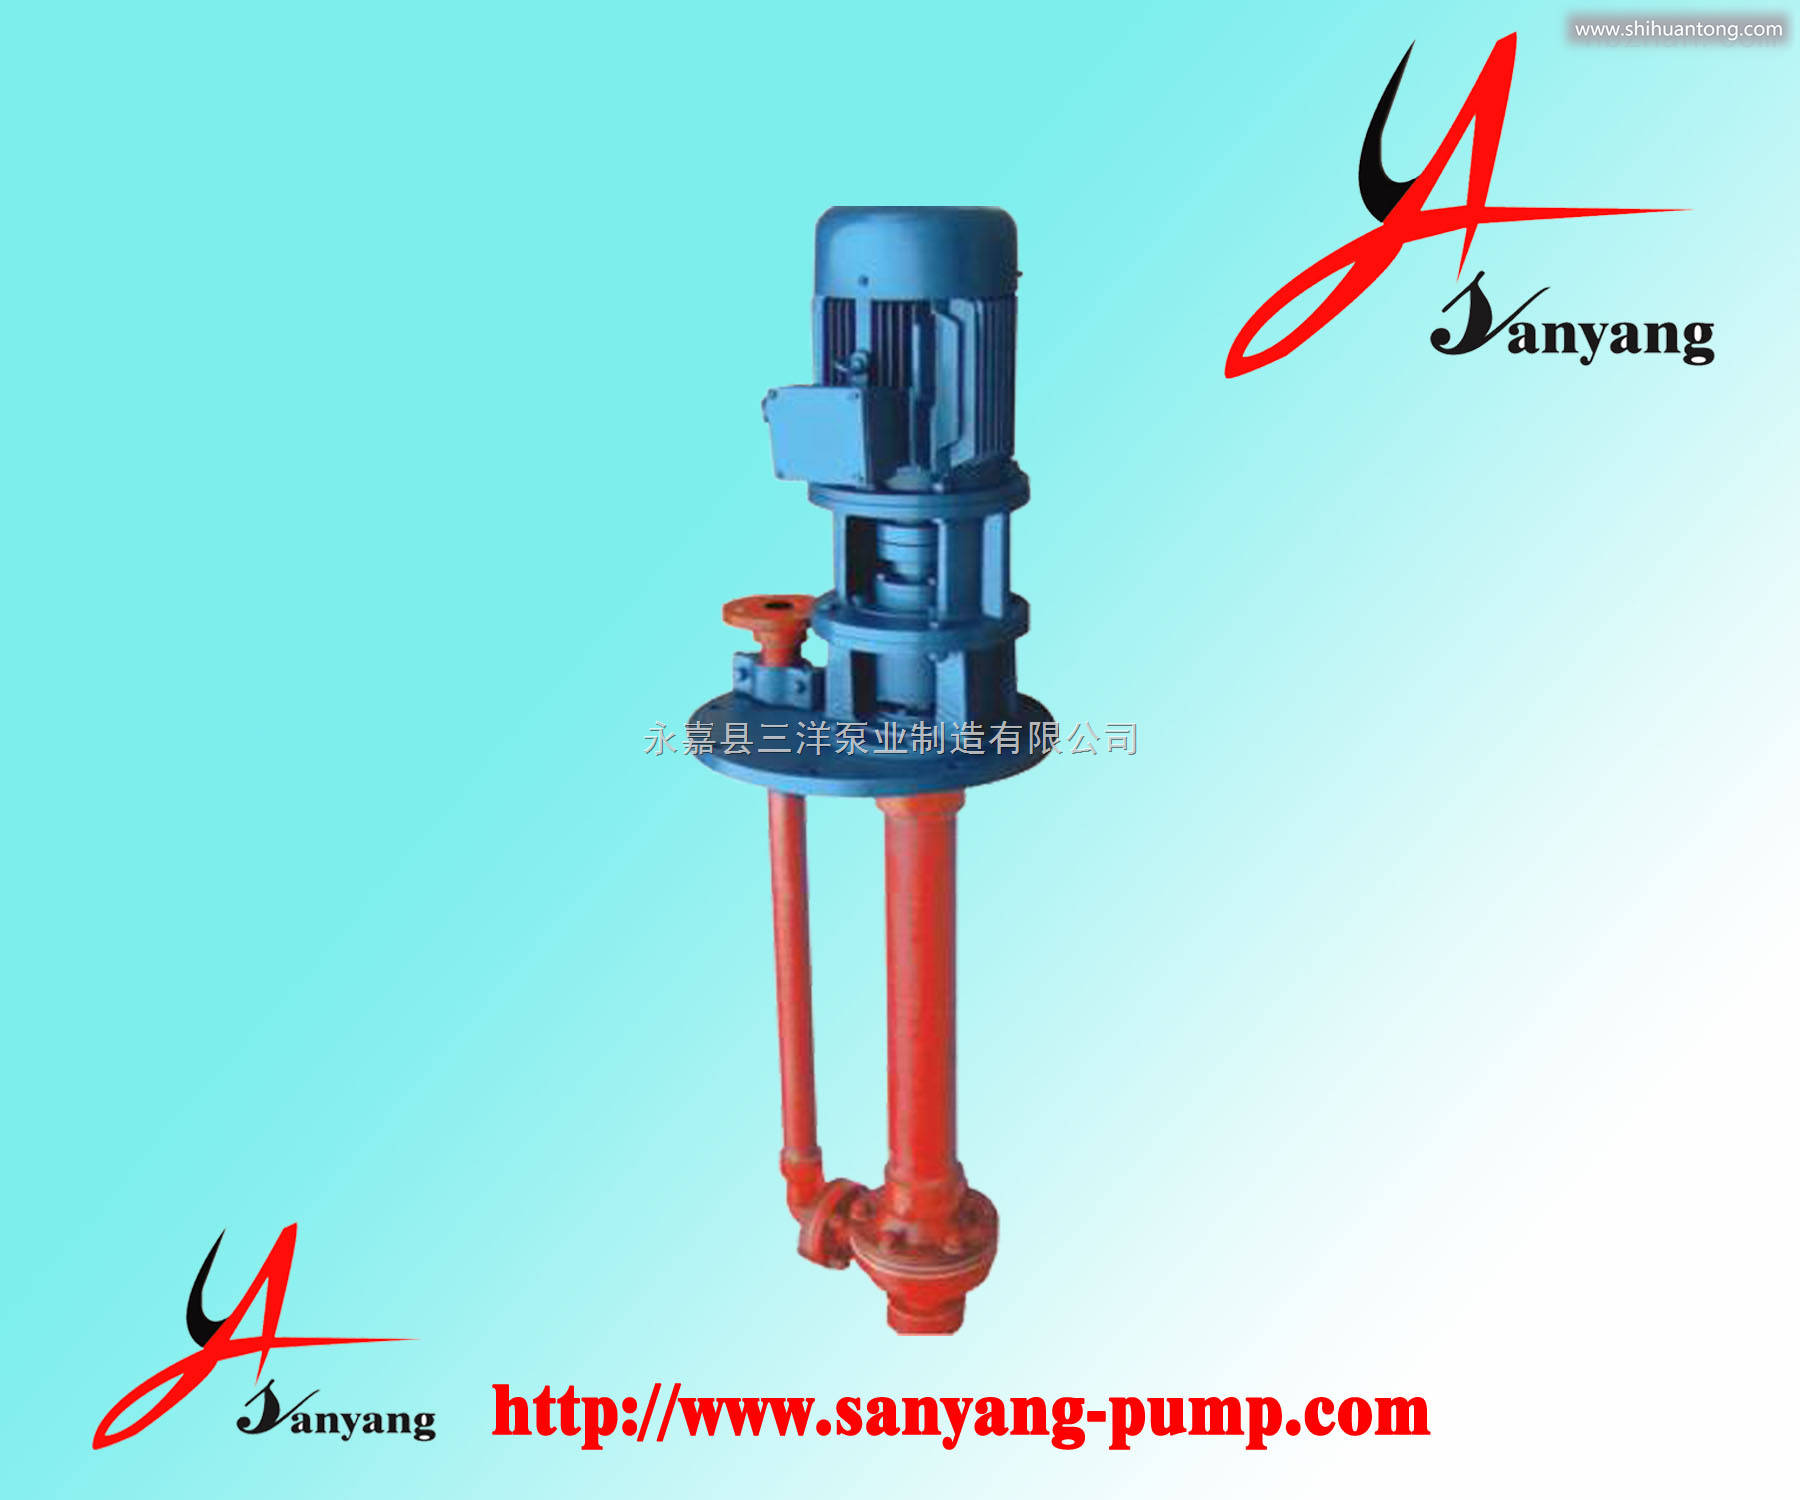 40FY-40A排污泵,FY立式耐腐蚀液下泵,排污泵价格,排污泵原理,排污泵结构图